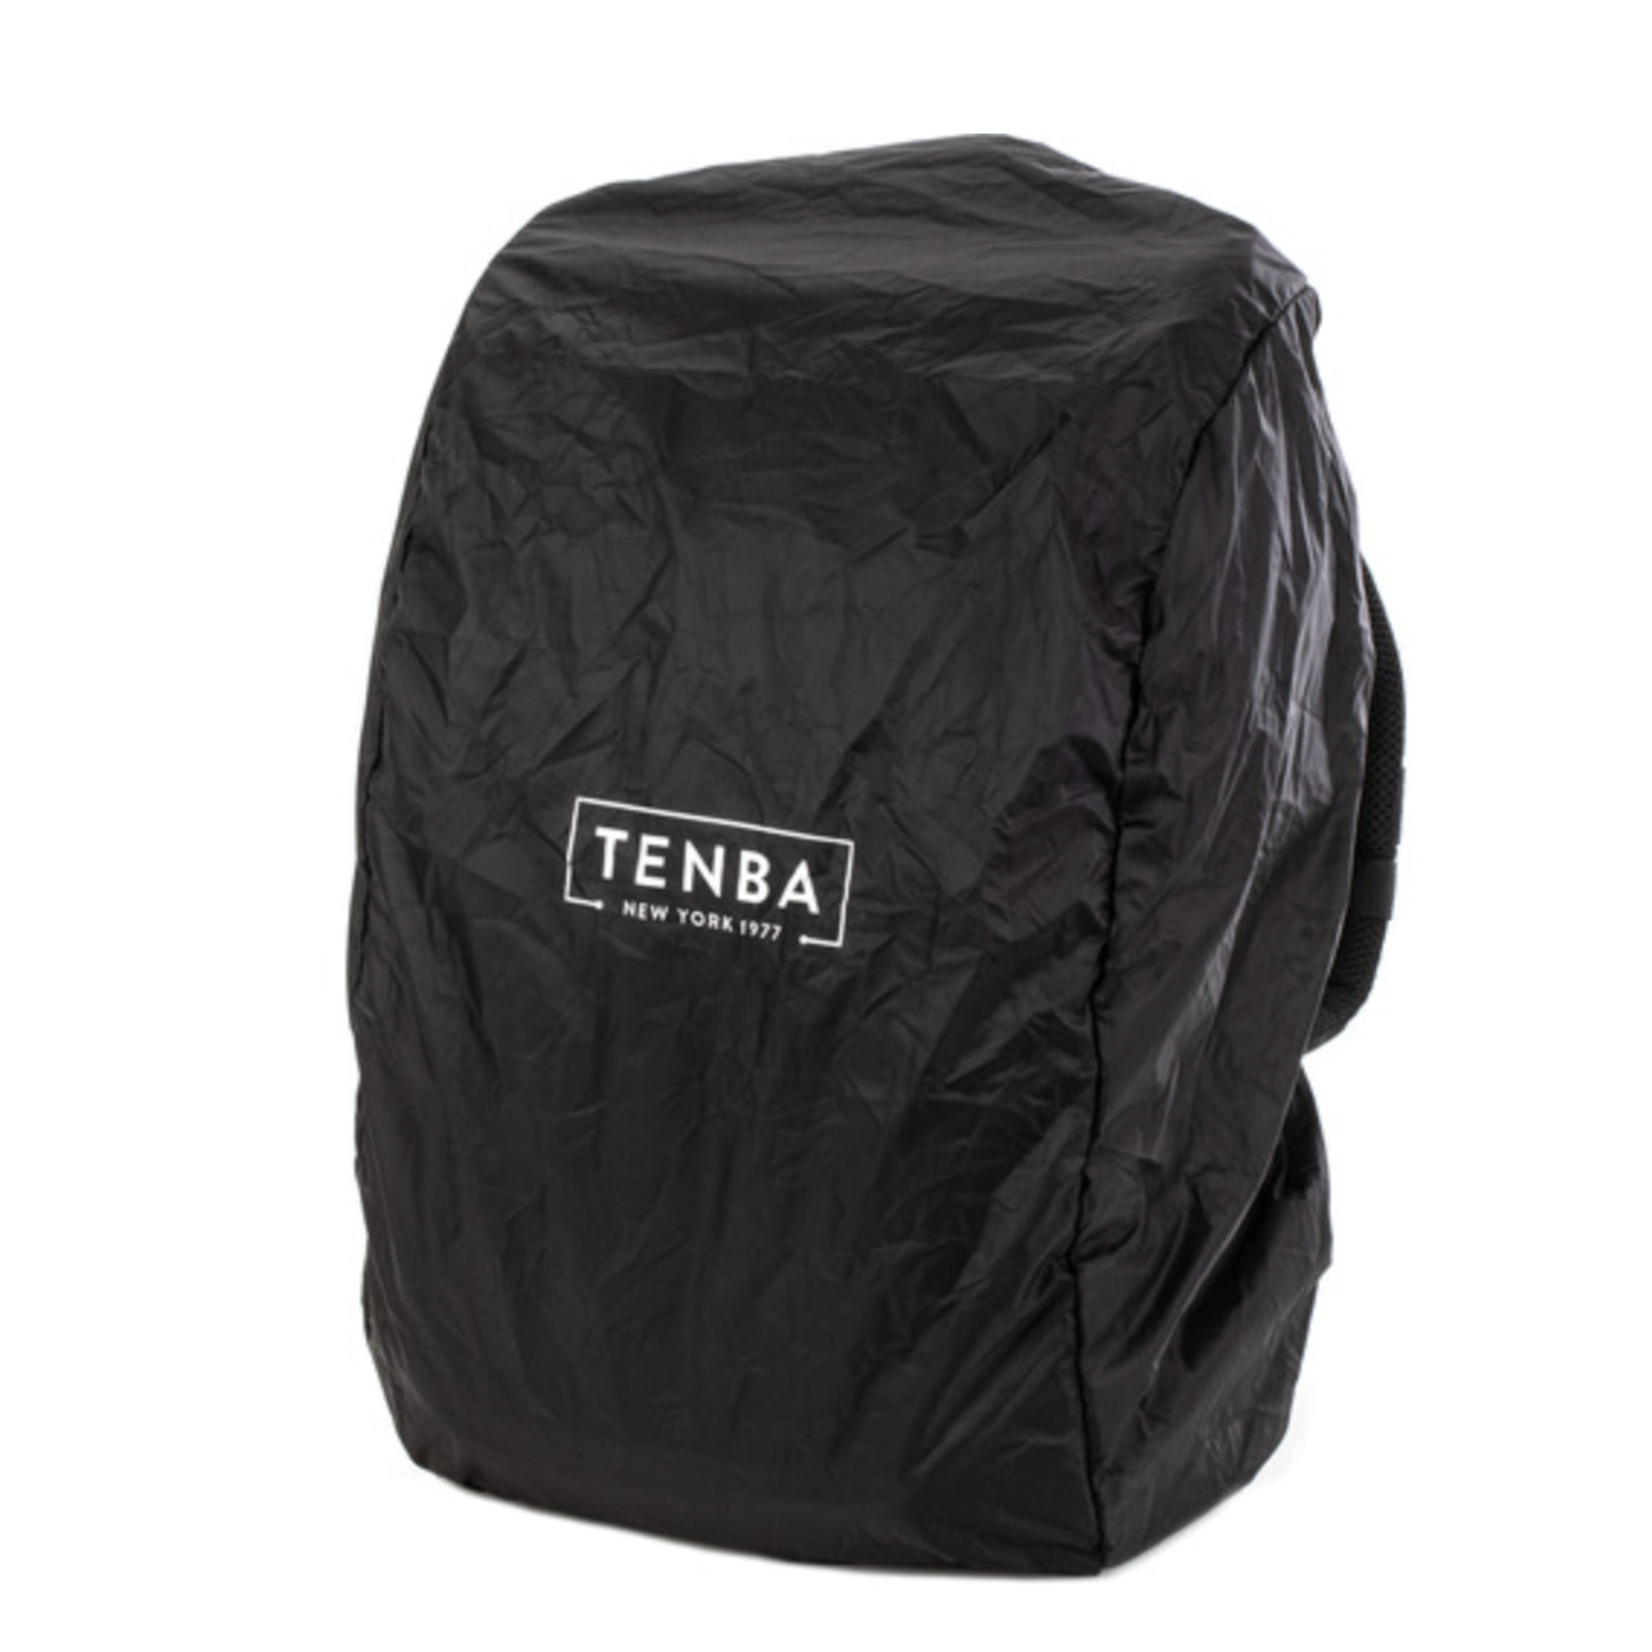 Tenba Tenba Fulton v2 16L Photo Backpack (black & black camouflage)